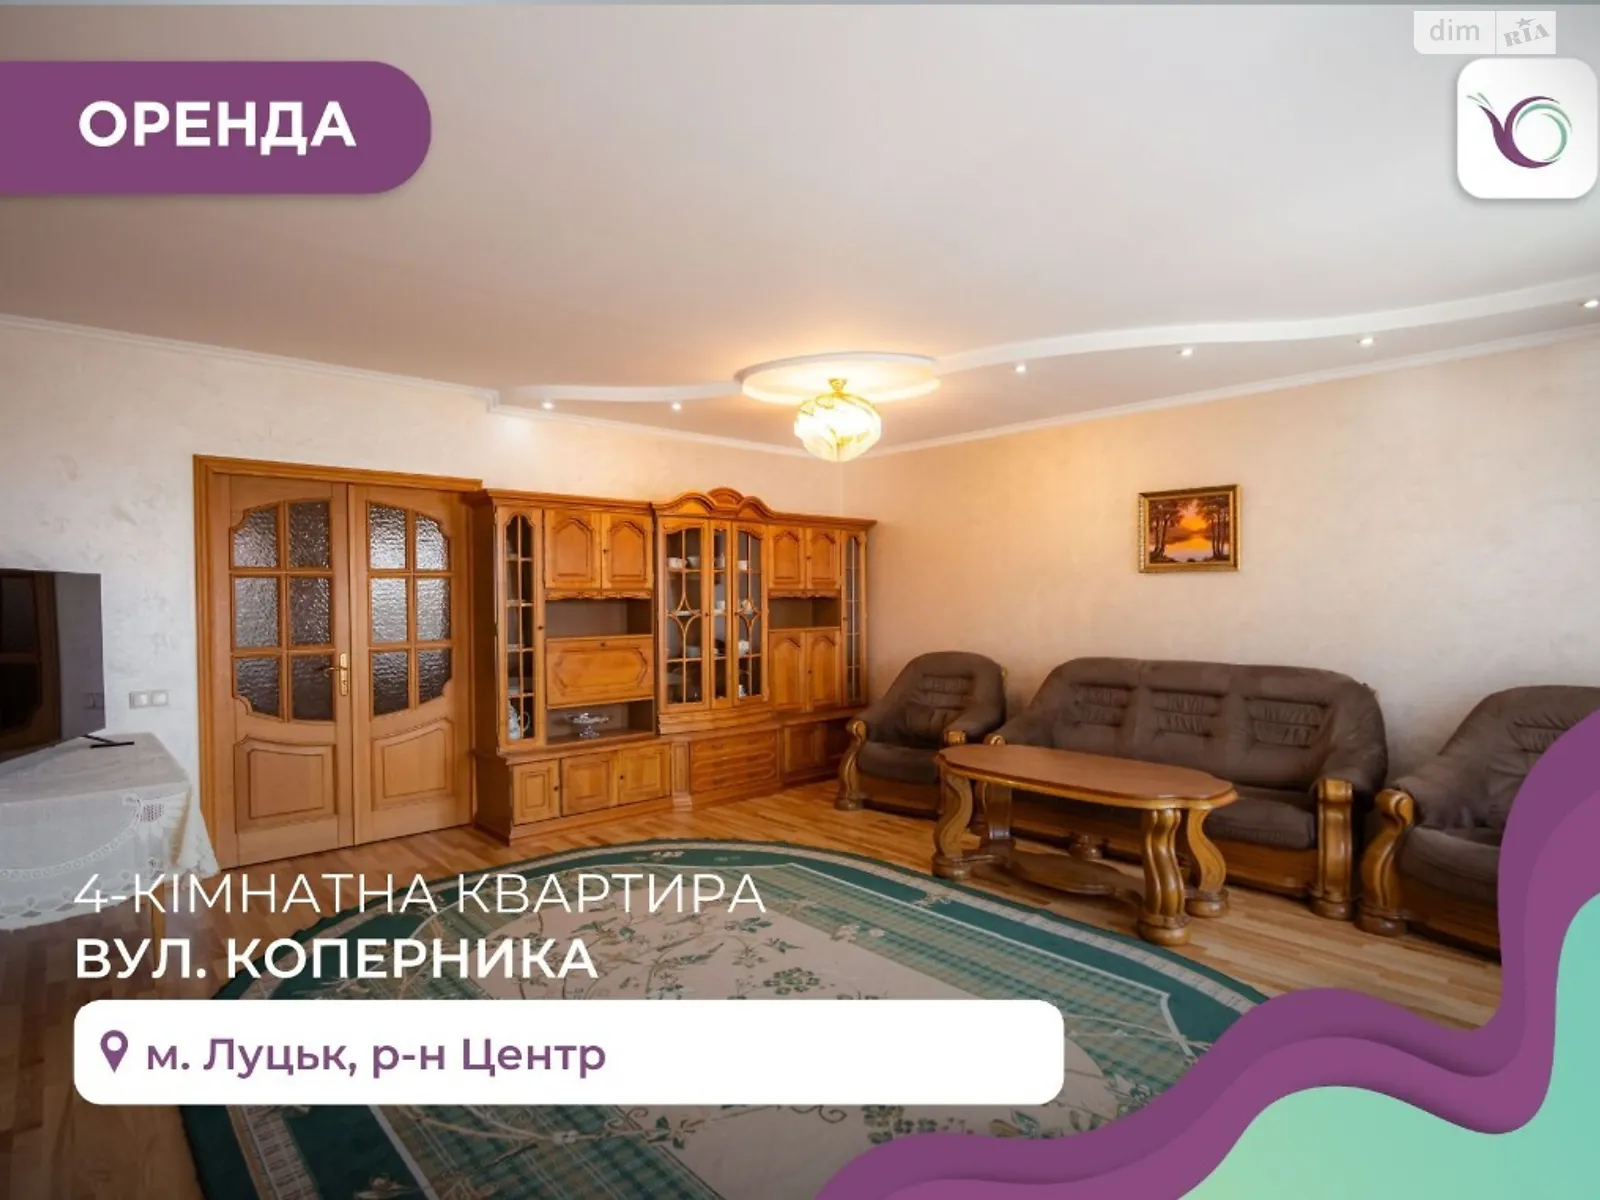 4-кімнатна квартира 140 кв. м у Луцьку, цена: 23000 грн